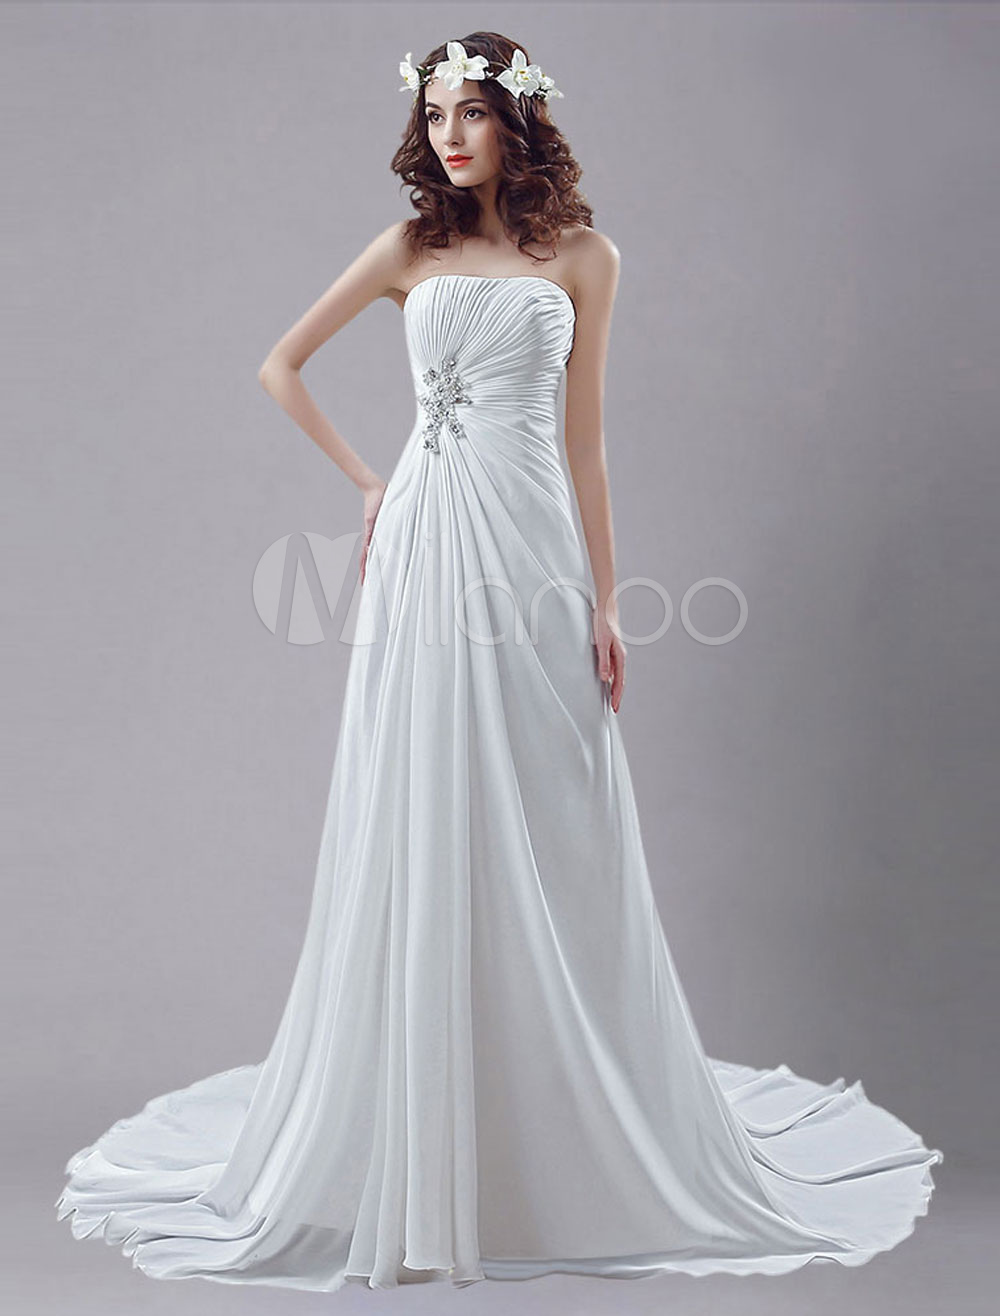 White Wedding Dress Strapless Rhinestone Pleated Wedding Gown - Milanoo.com